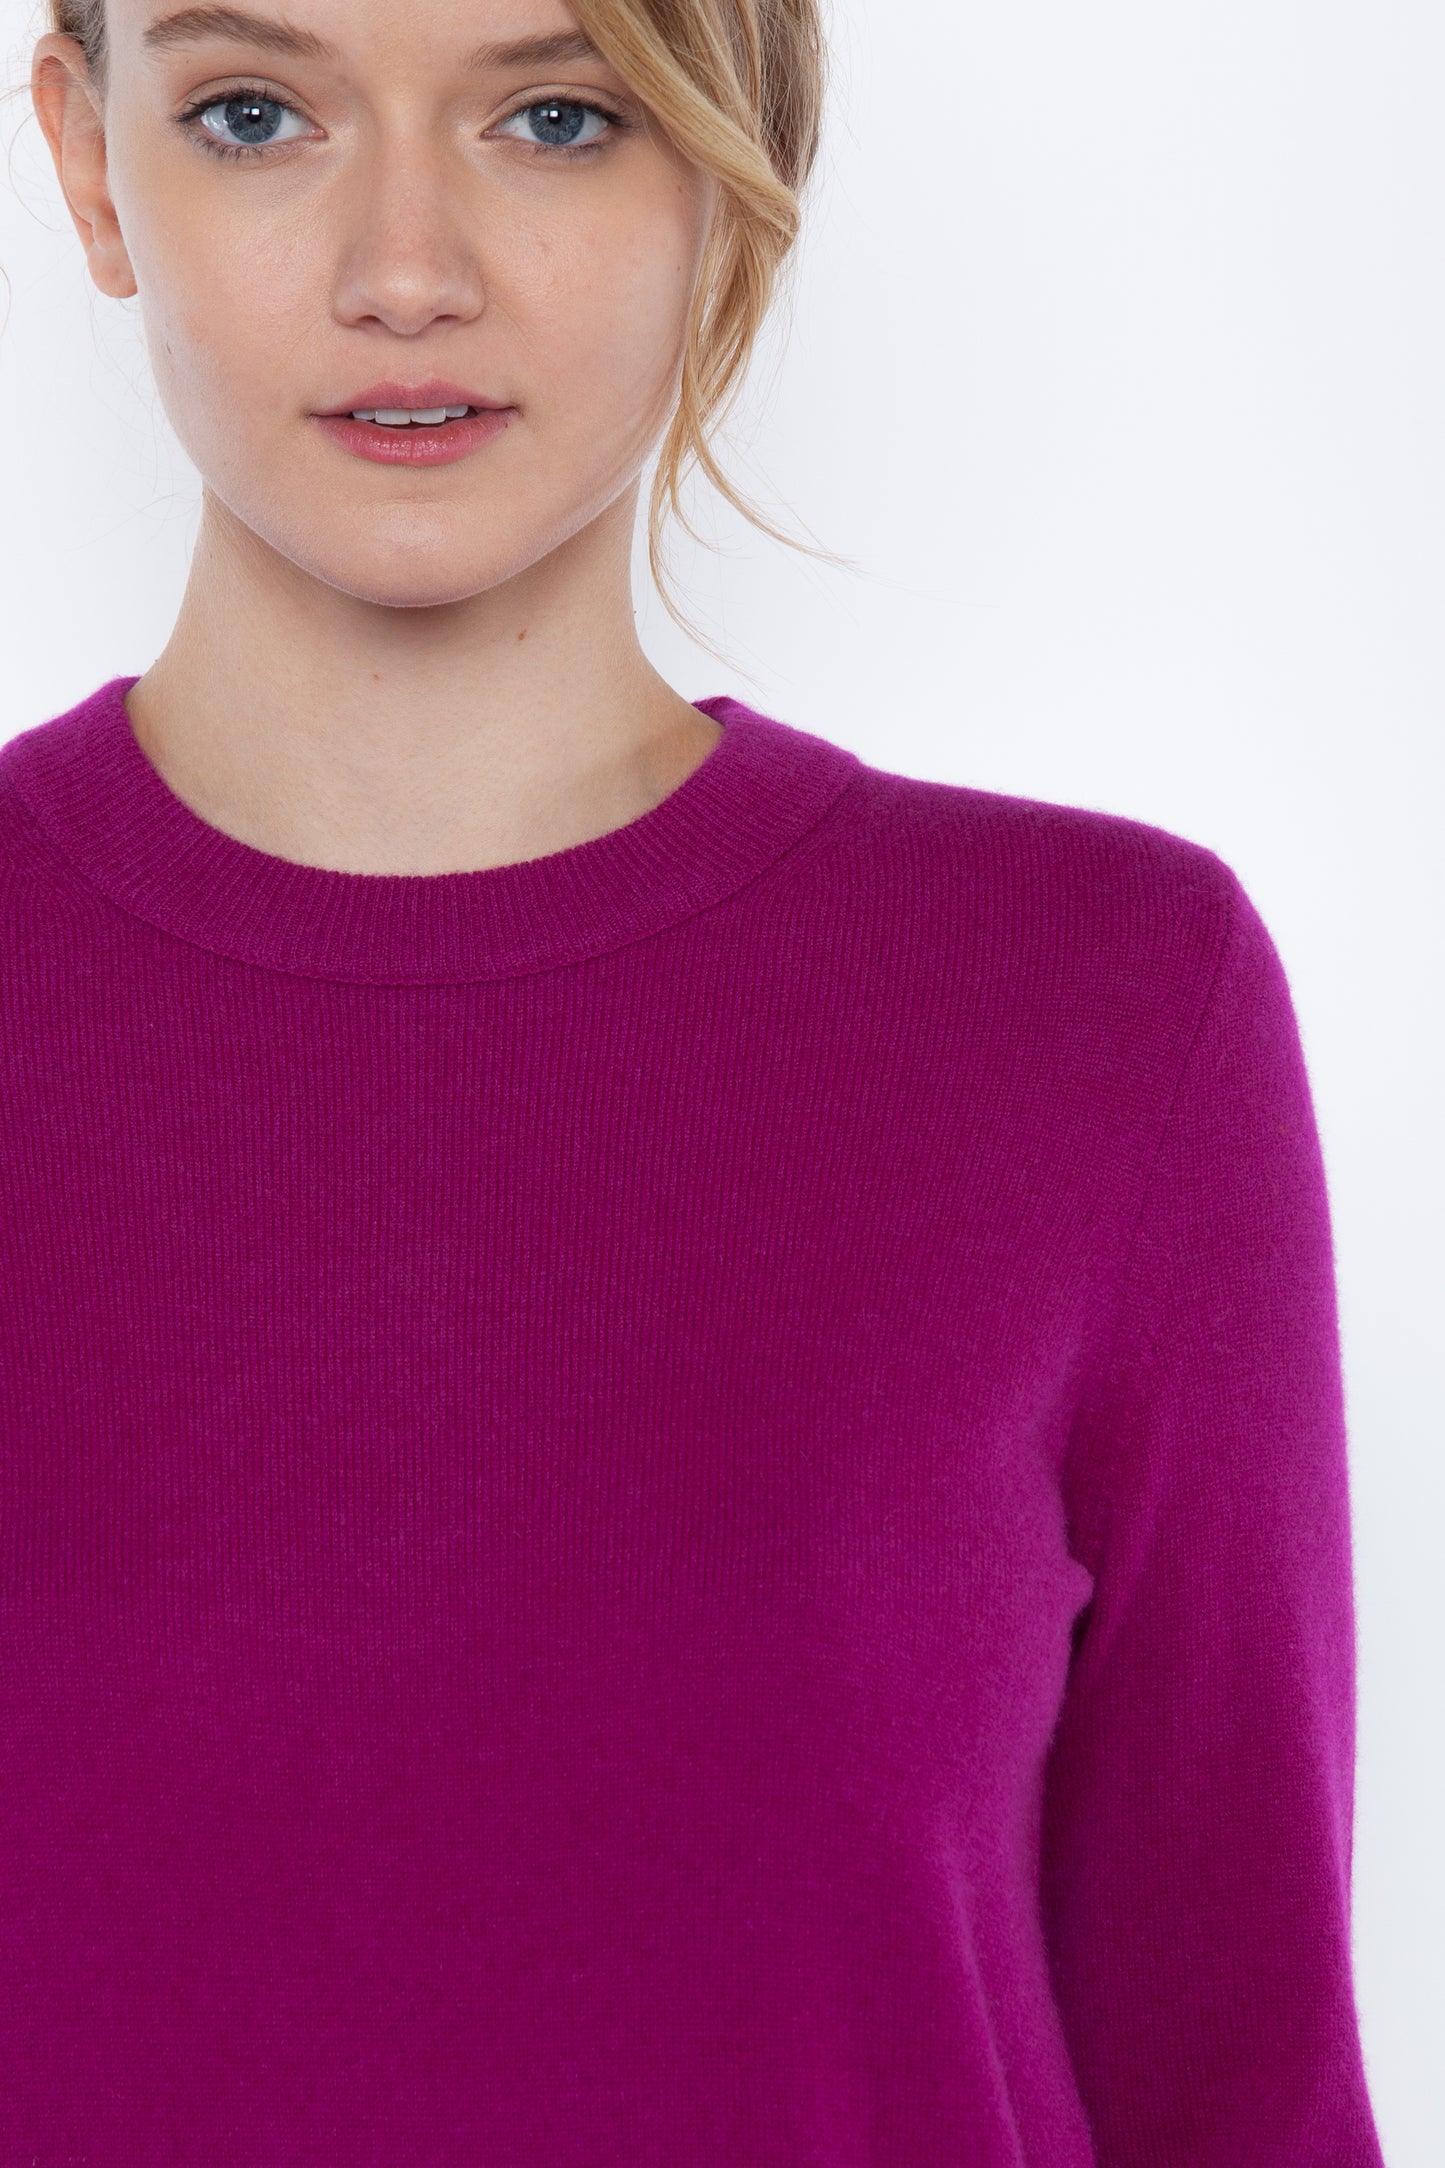 JENNIE LIU Women's 100% Pure Cashmere Long Sleeve Crew Neck Sweater